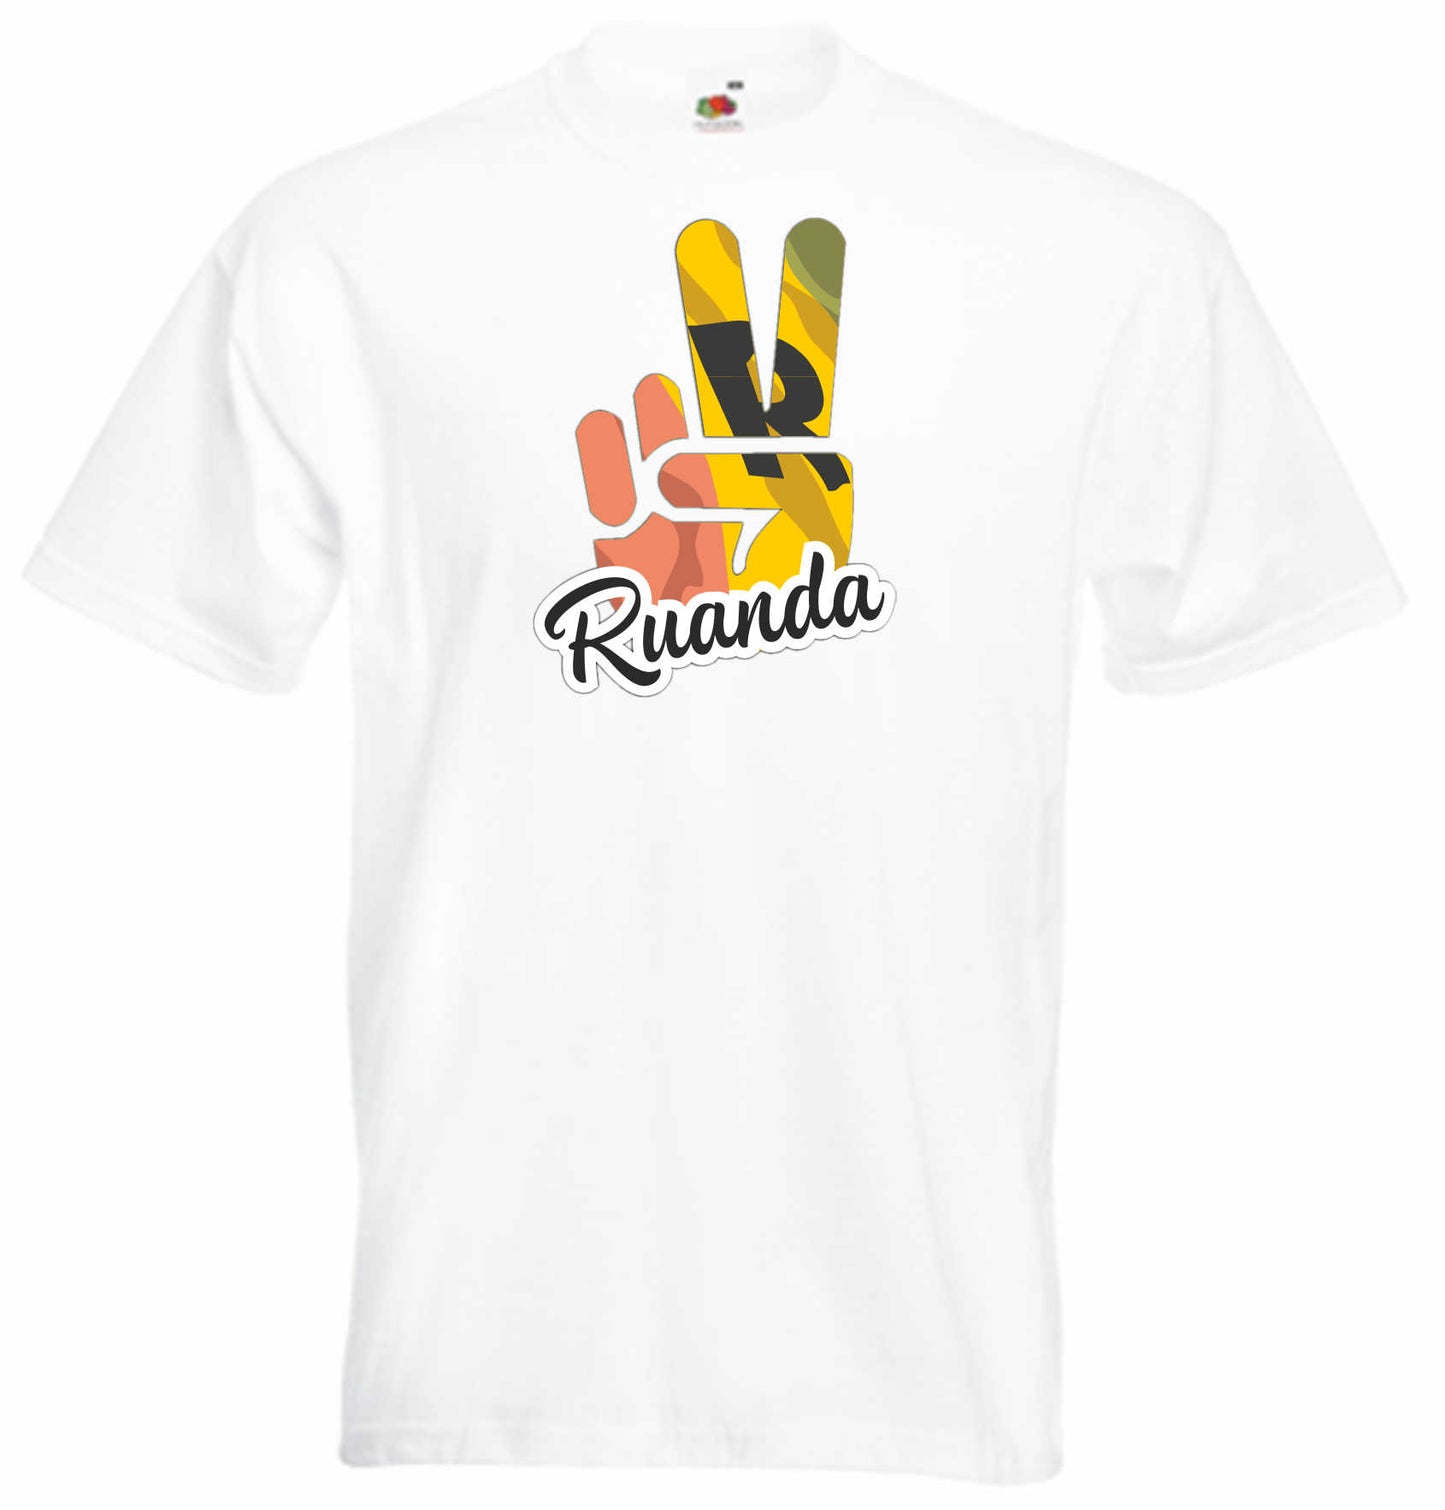 T-Shirt Herren - Victory - Flagge / Fahne - Ruanda - Sieg